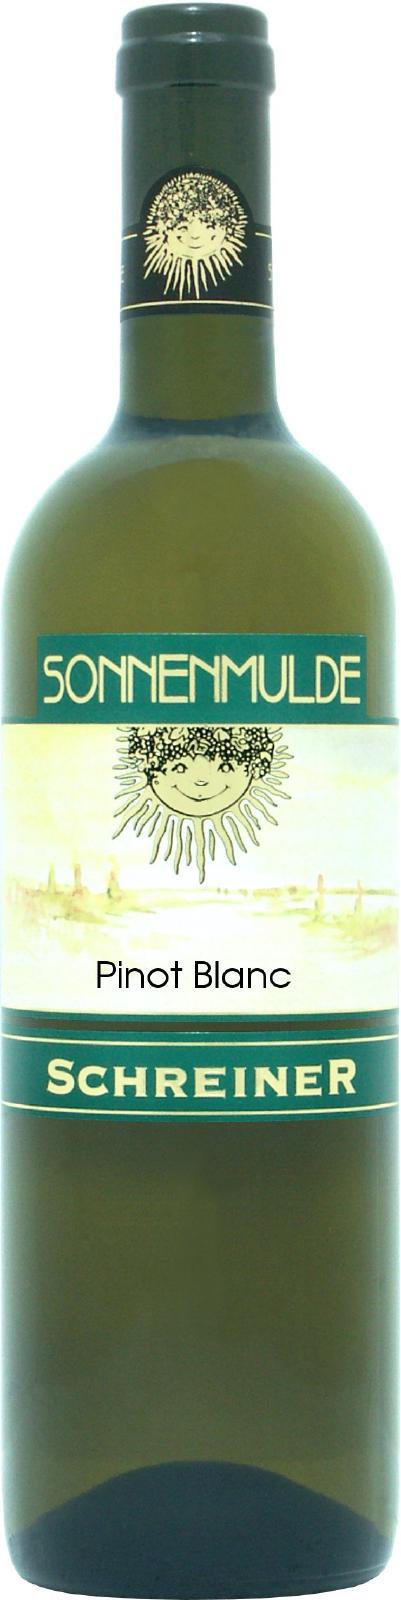 A bottle of Pinot Blanc semi-dry